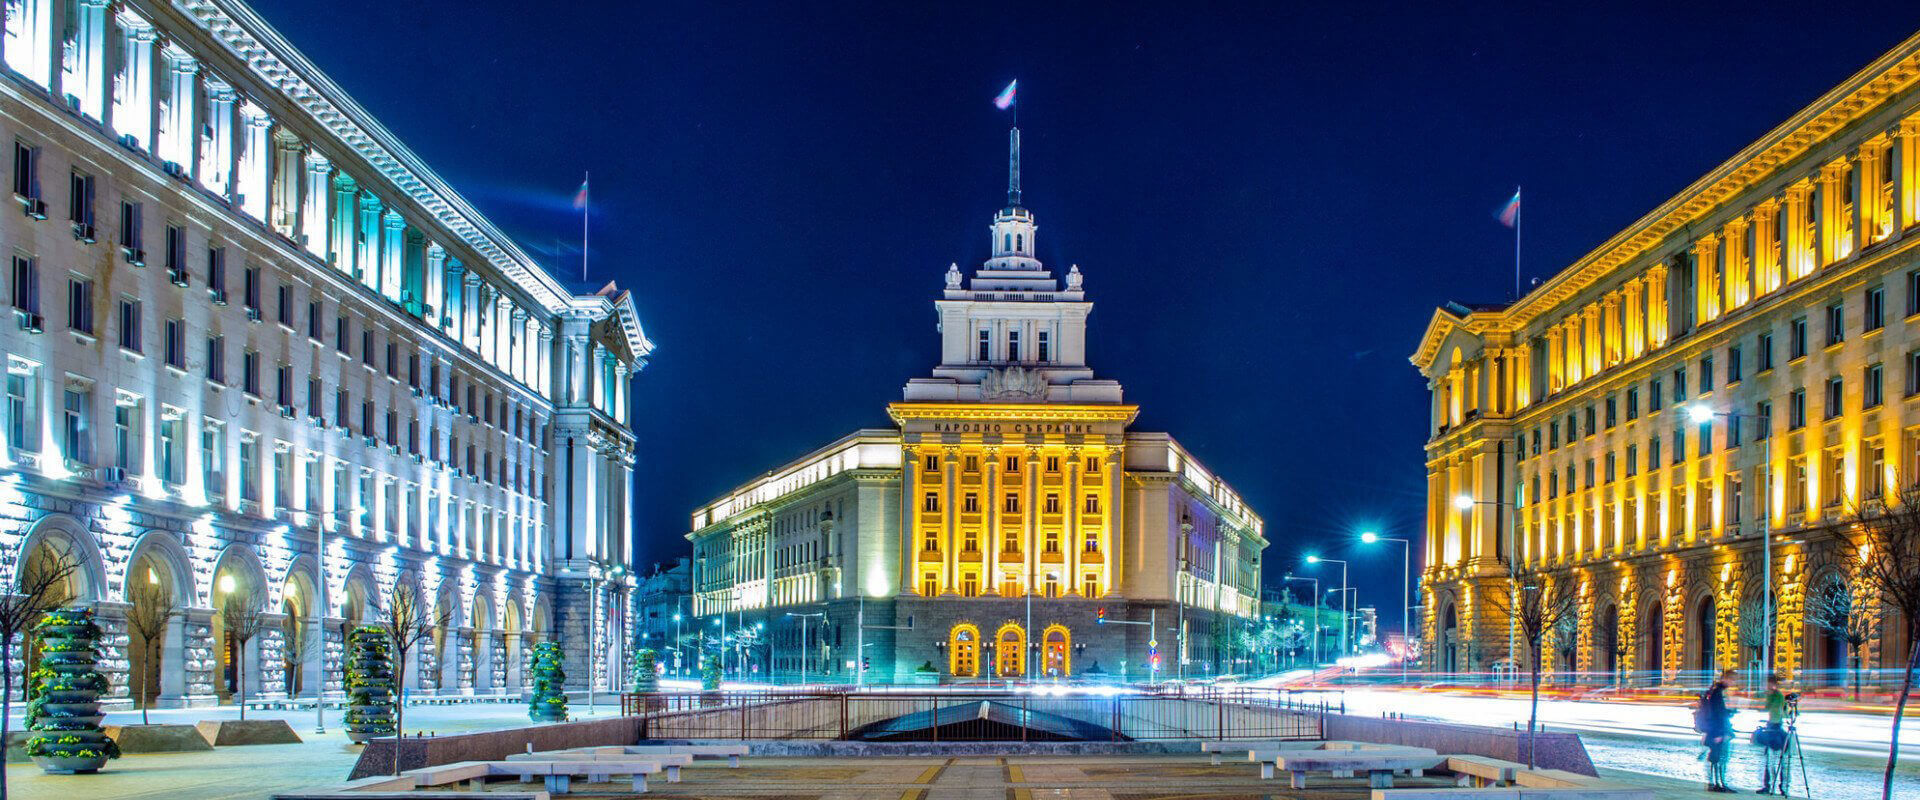 Parliament in Sofia